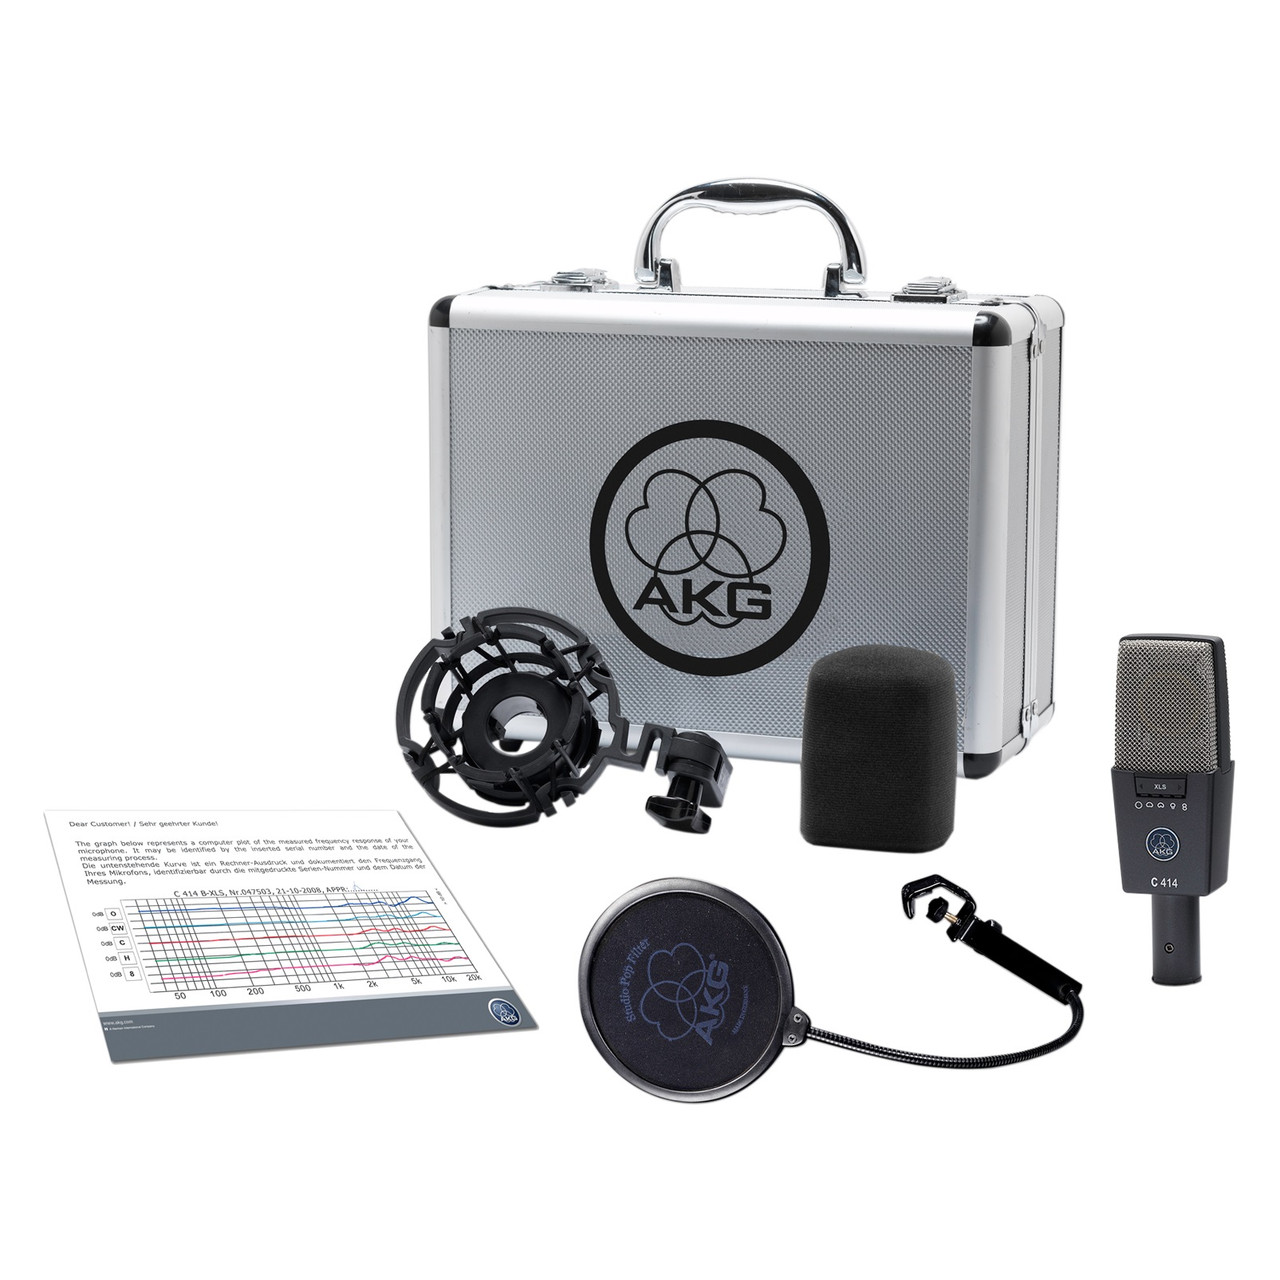 AKG C414 XLS Large Diaphragm Condenser Microphone